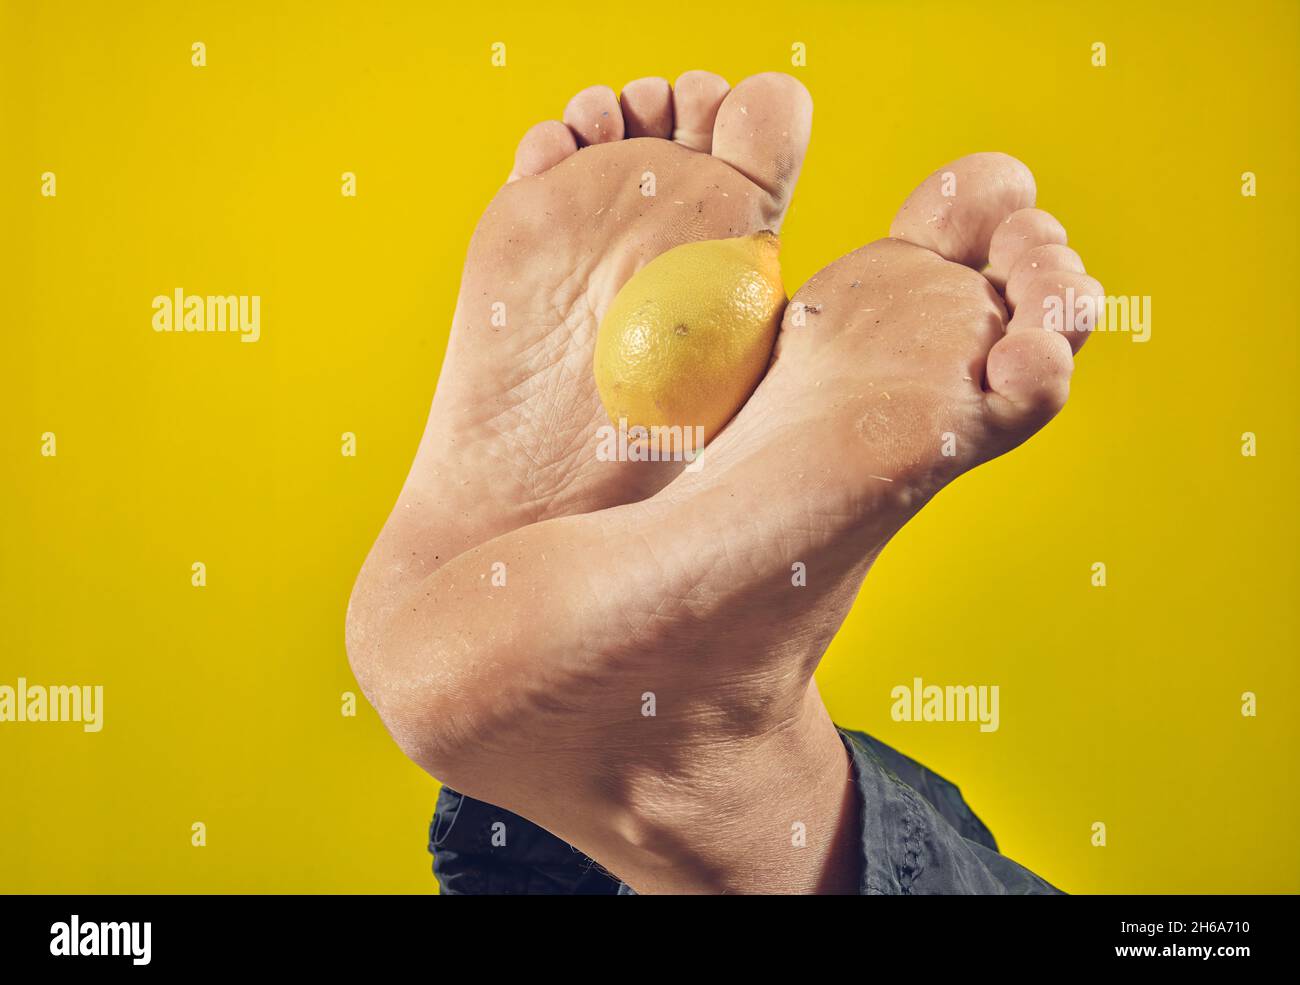 Man holding lemon with his feet Stock Photo